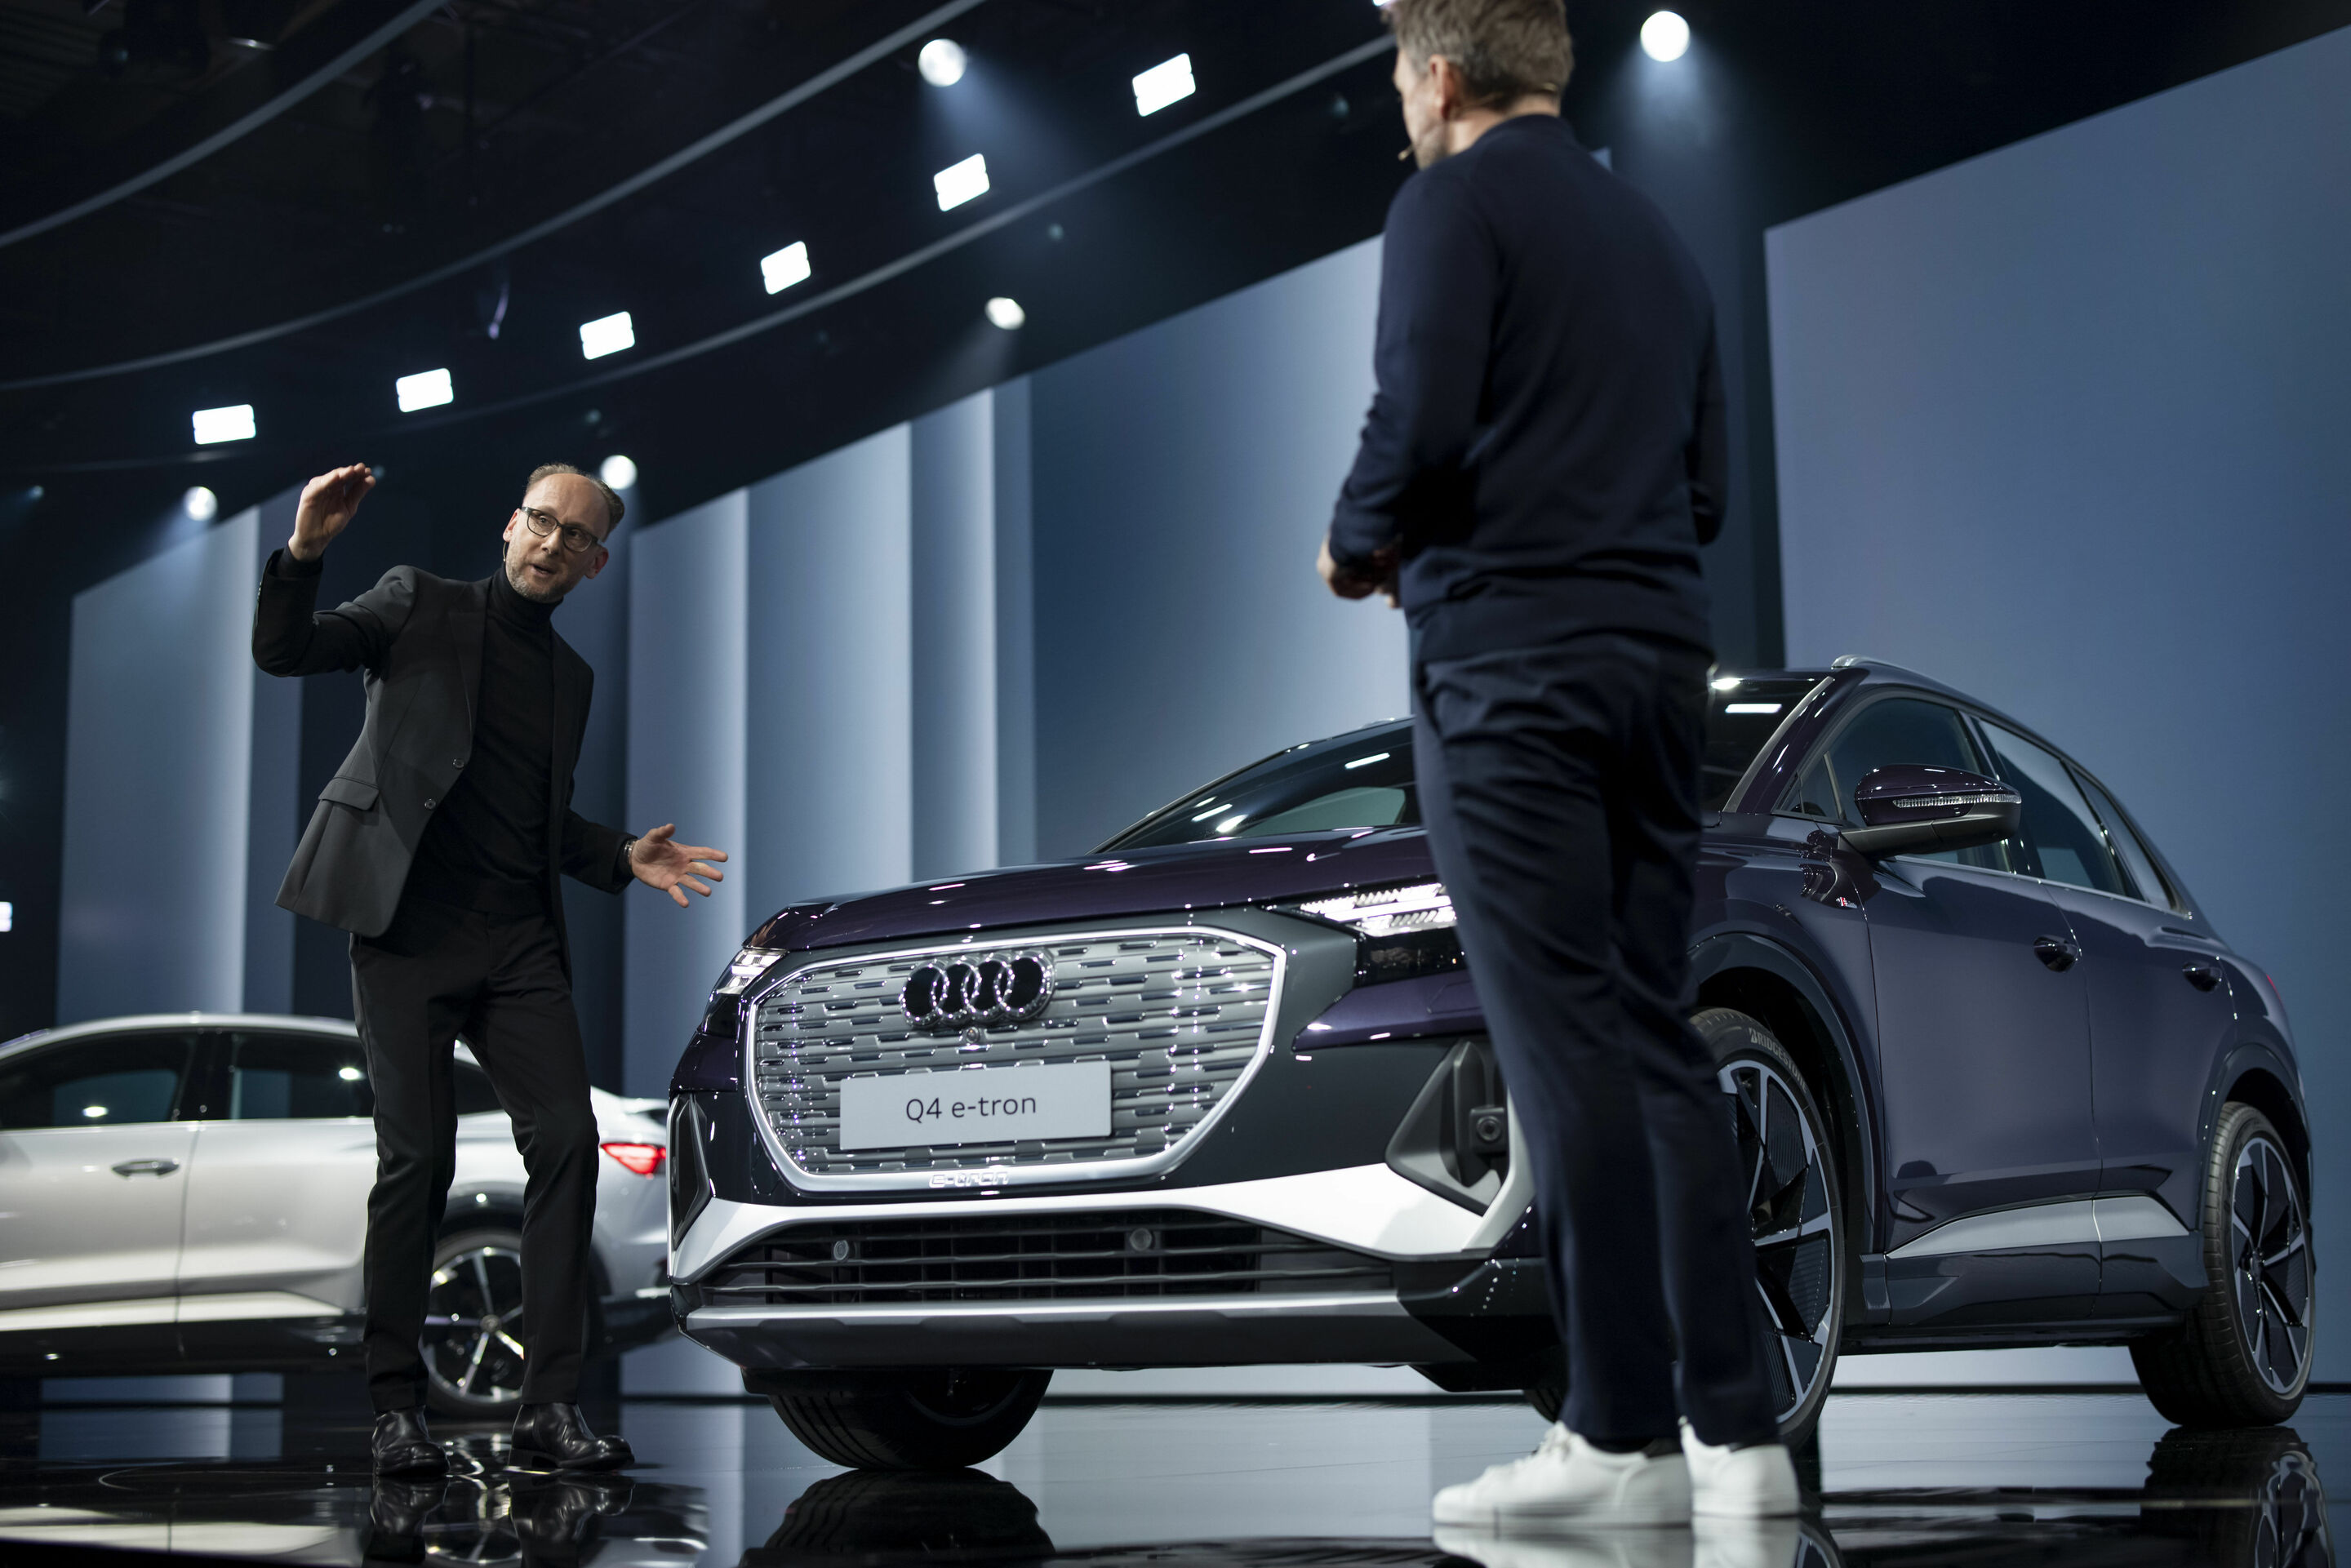 Weltpremiere Audi Q4 e-tron: Celebration of Progress